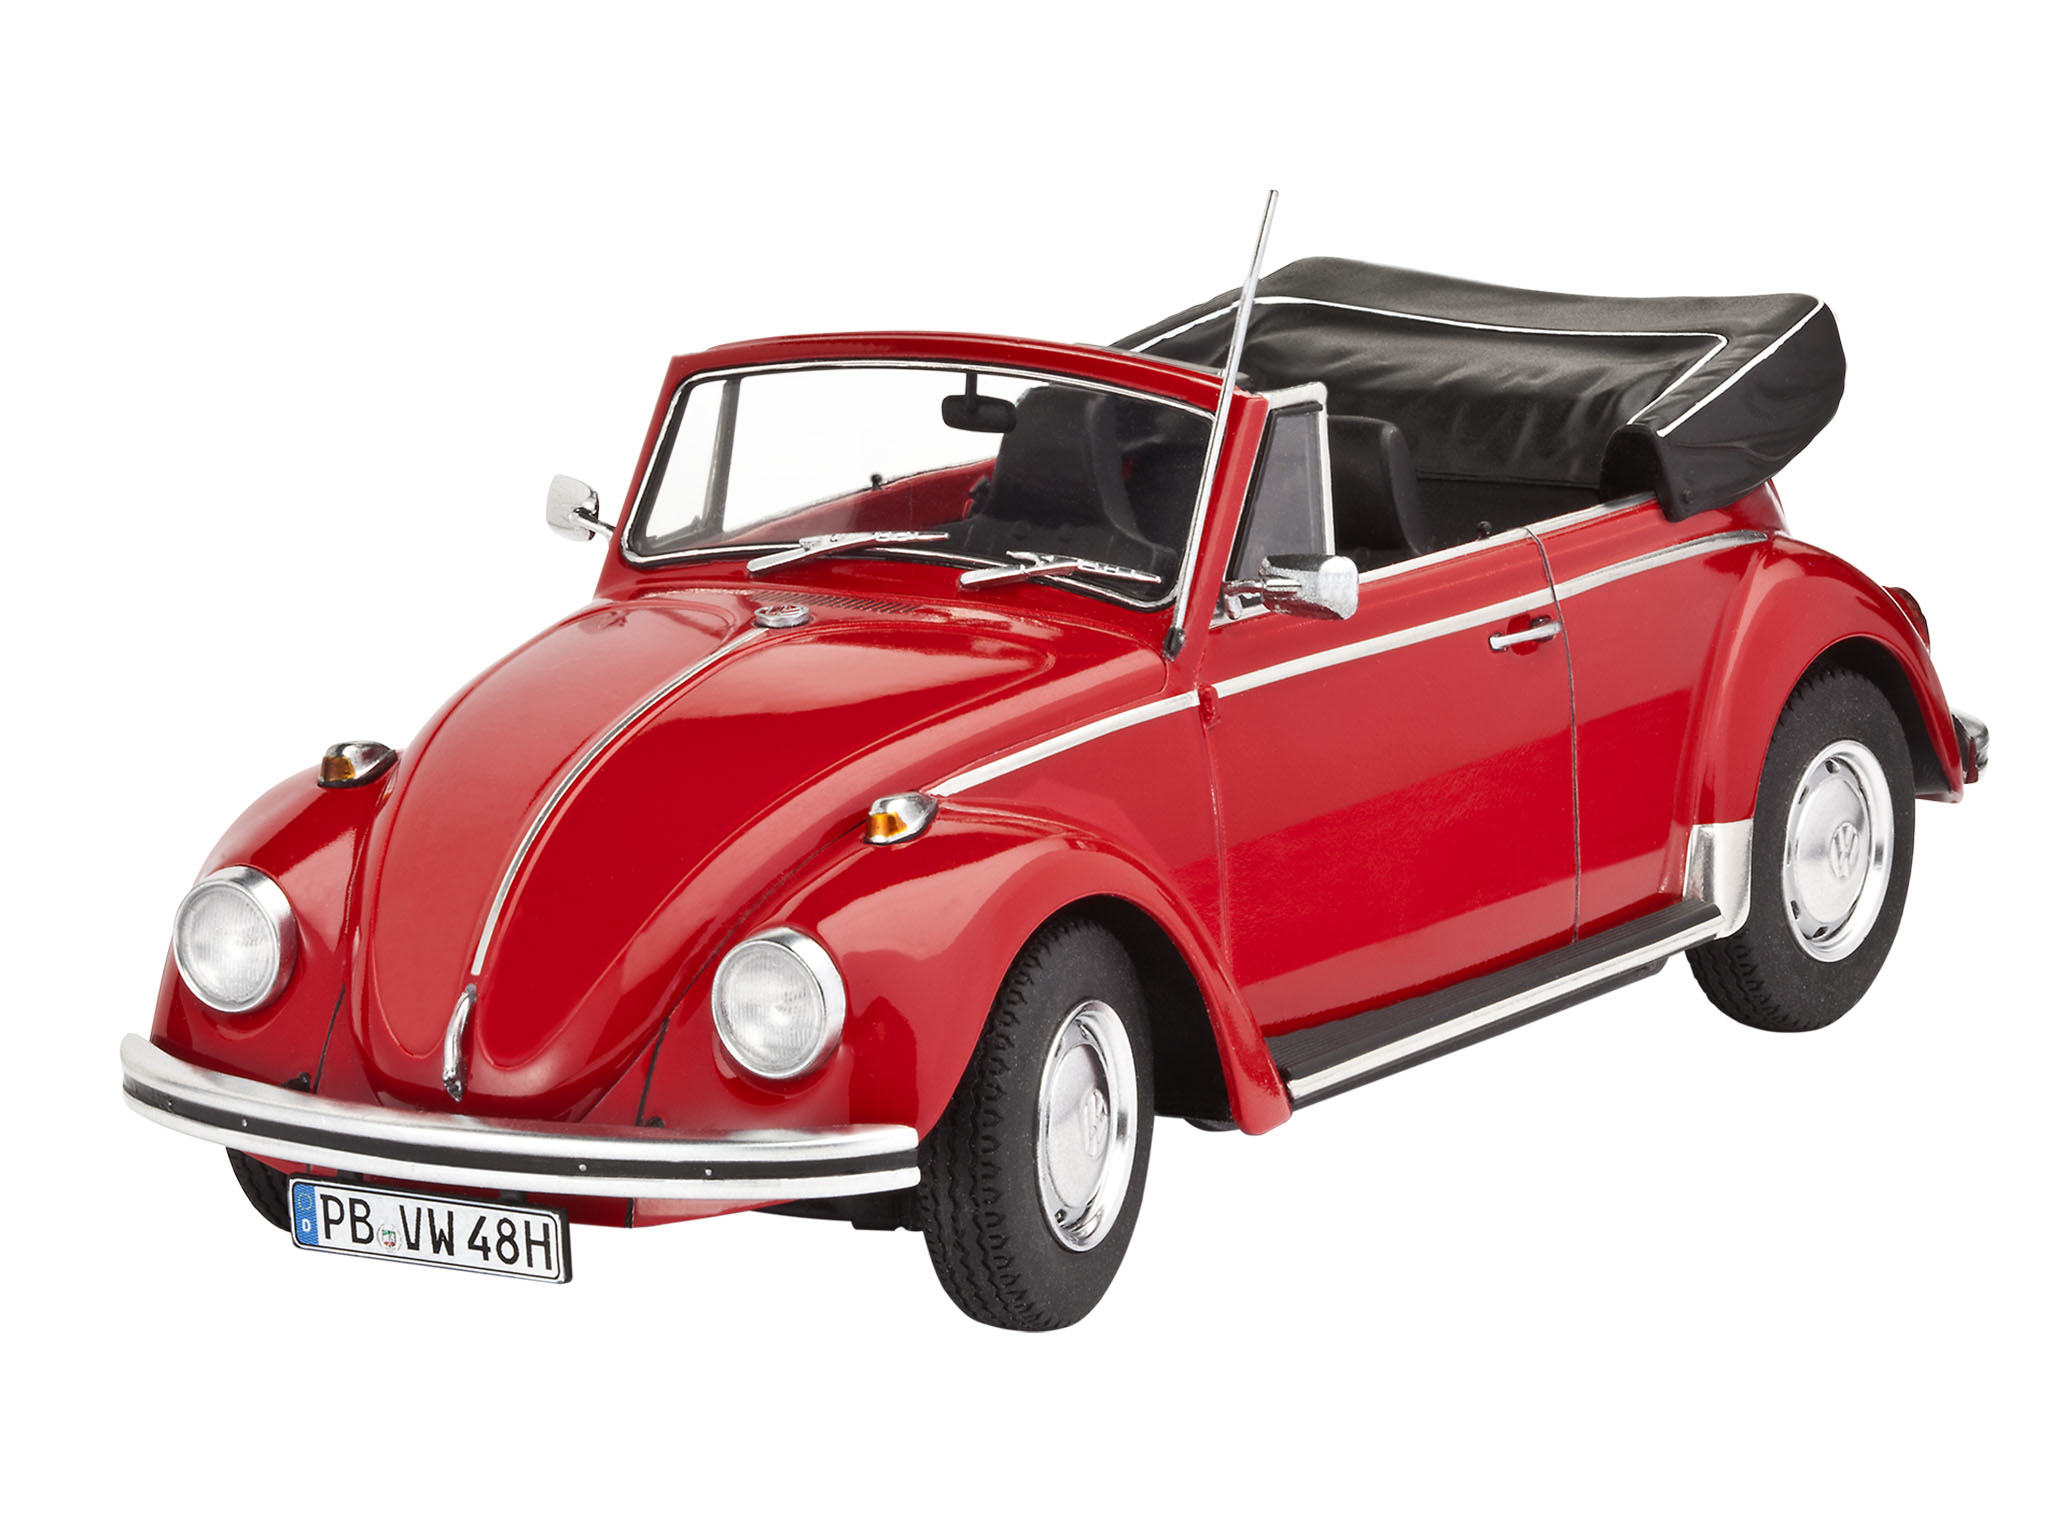 07078 Revell 1:24 Автомобиль VW Beetle Cabriolet 1970 # 1 hobbyplus.ru